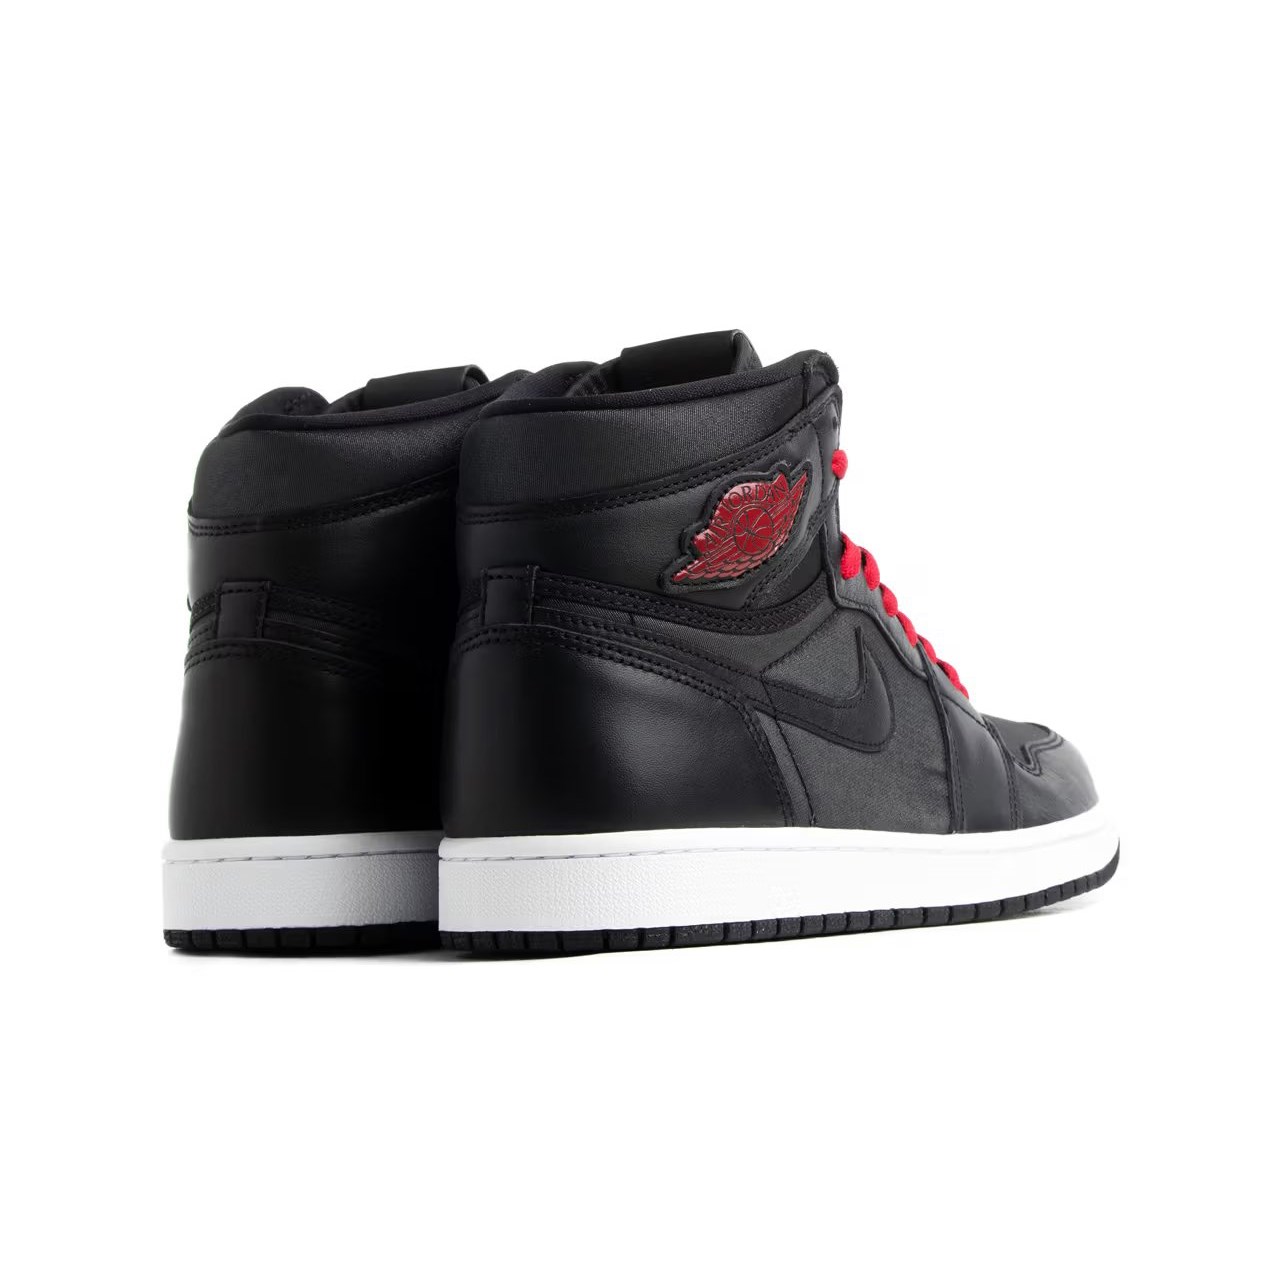 Nike Air Jordan 1 Retro High Erkek Spor Ayakkabısı Black - Gym Red - Black - White